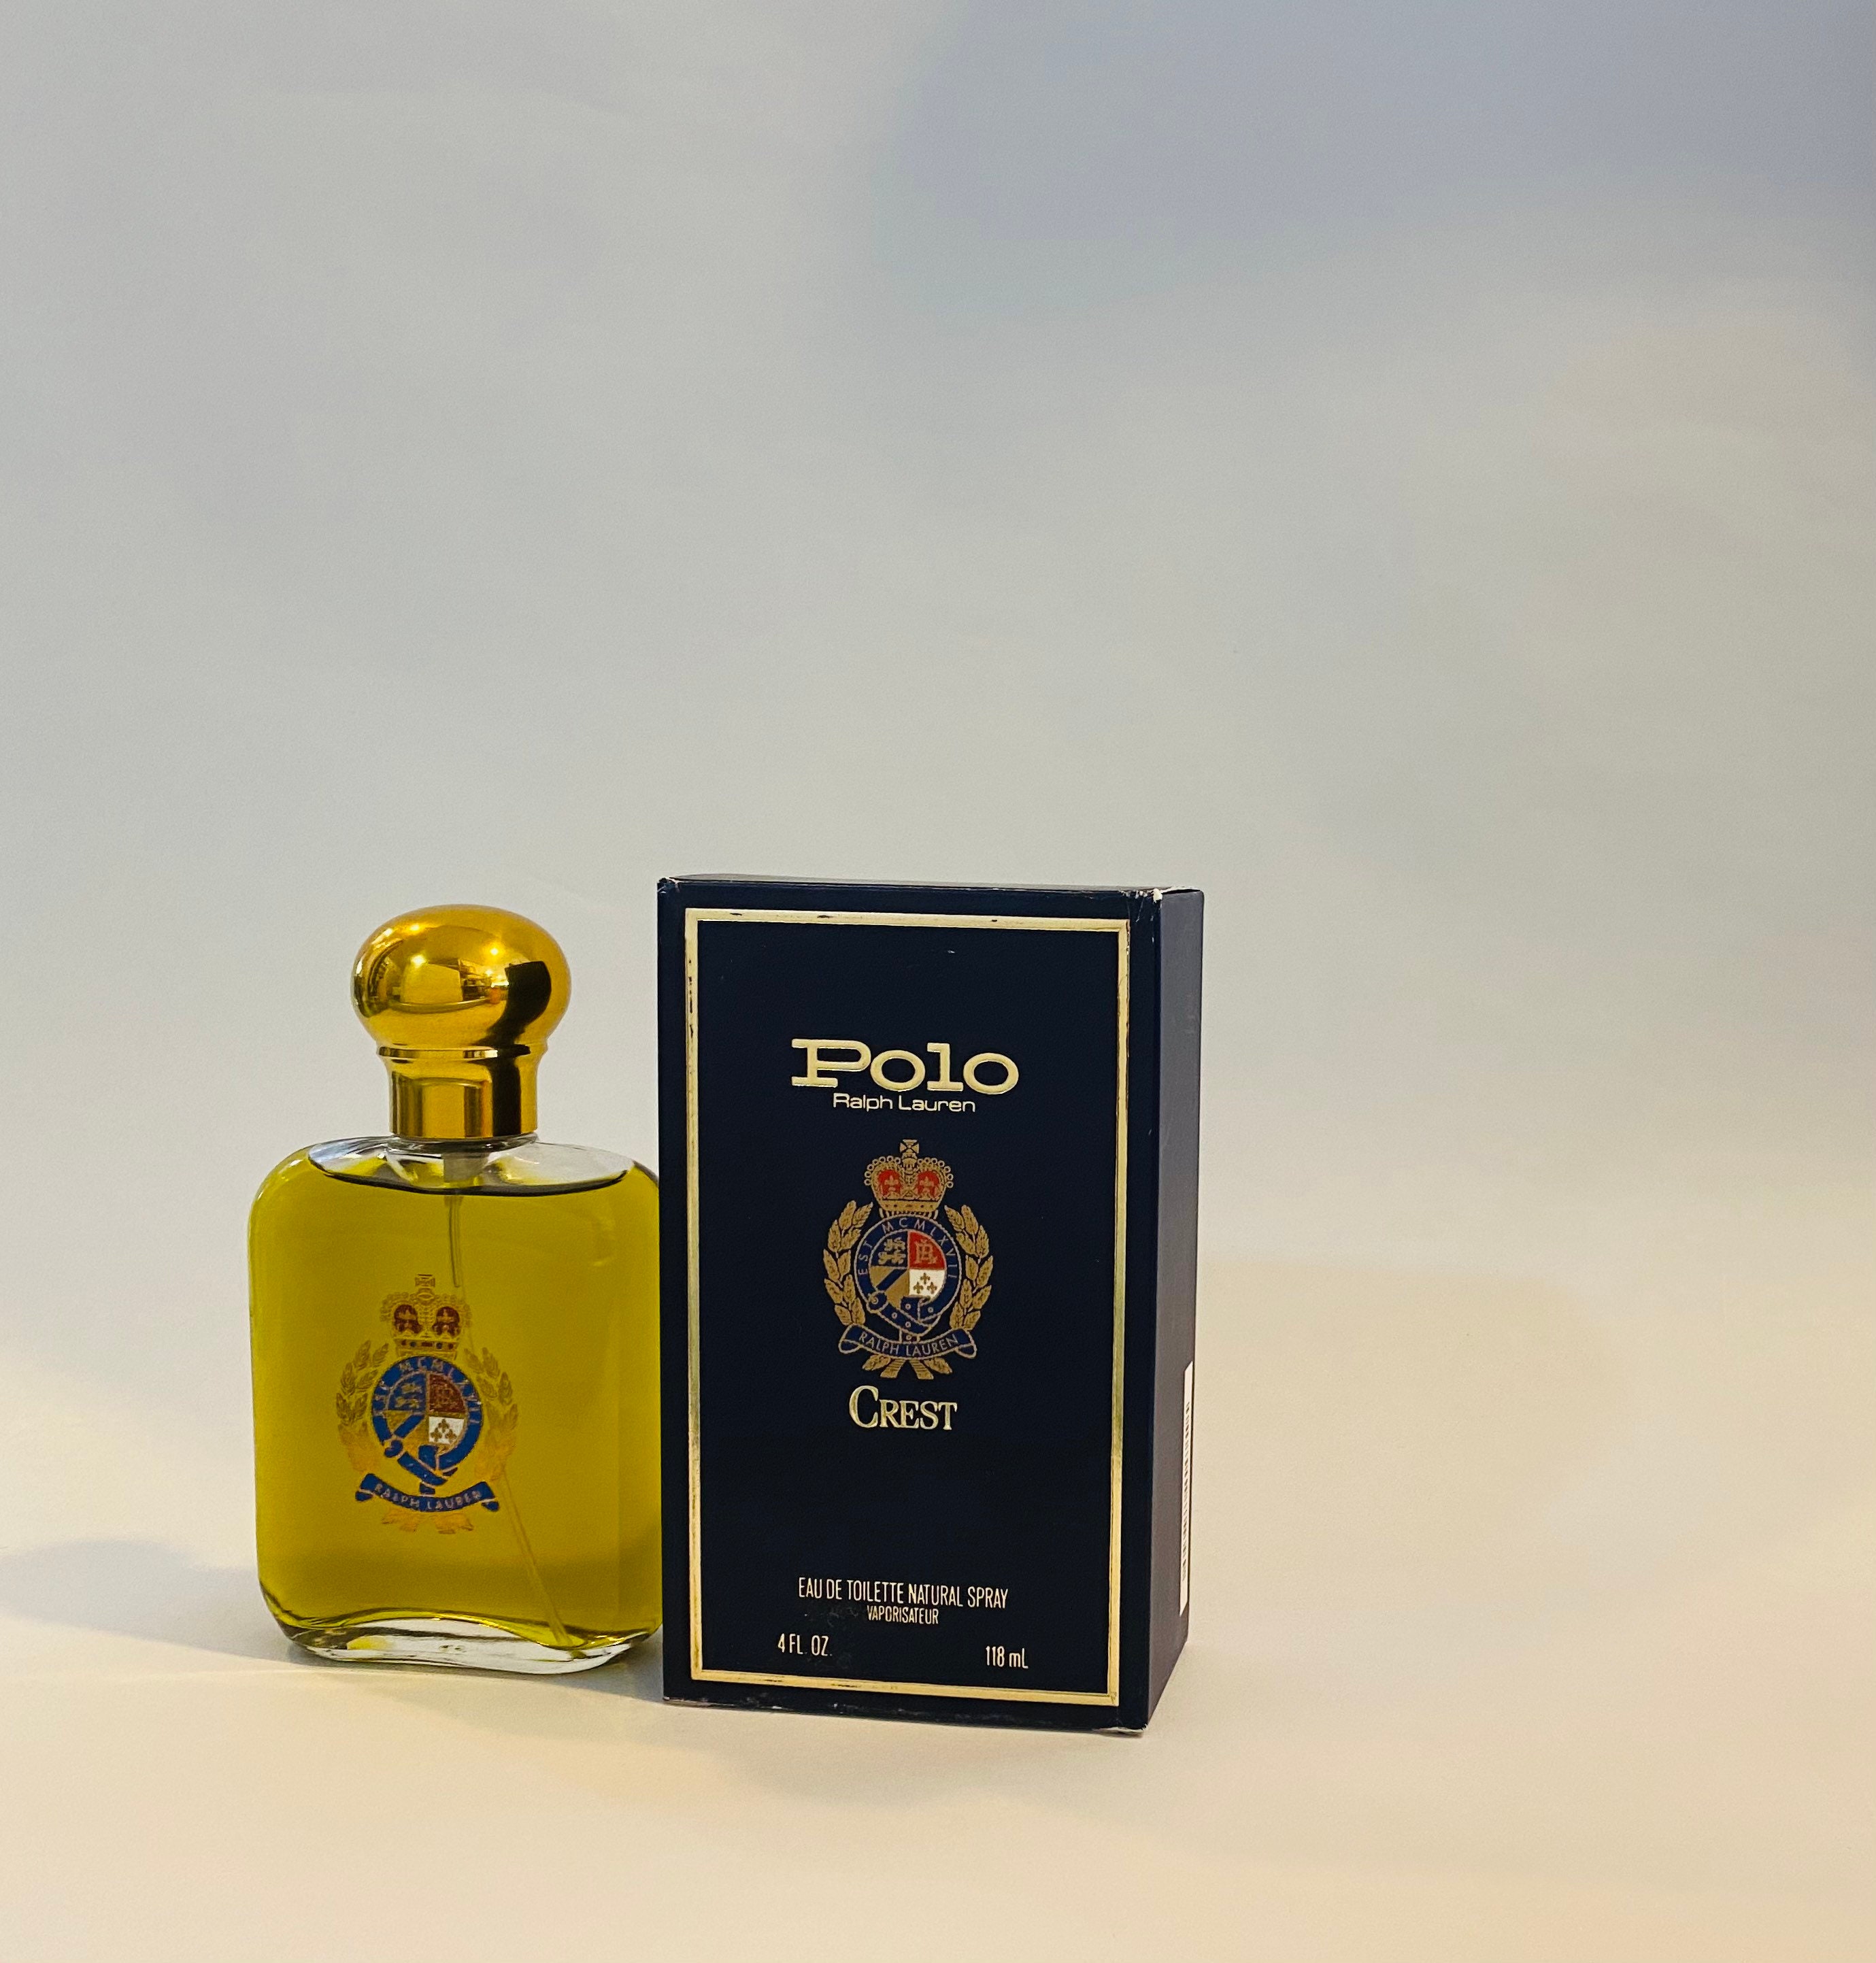 Discontinued Perfume Ralph Lauren - Etsy